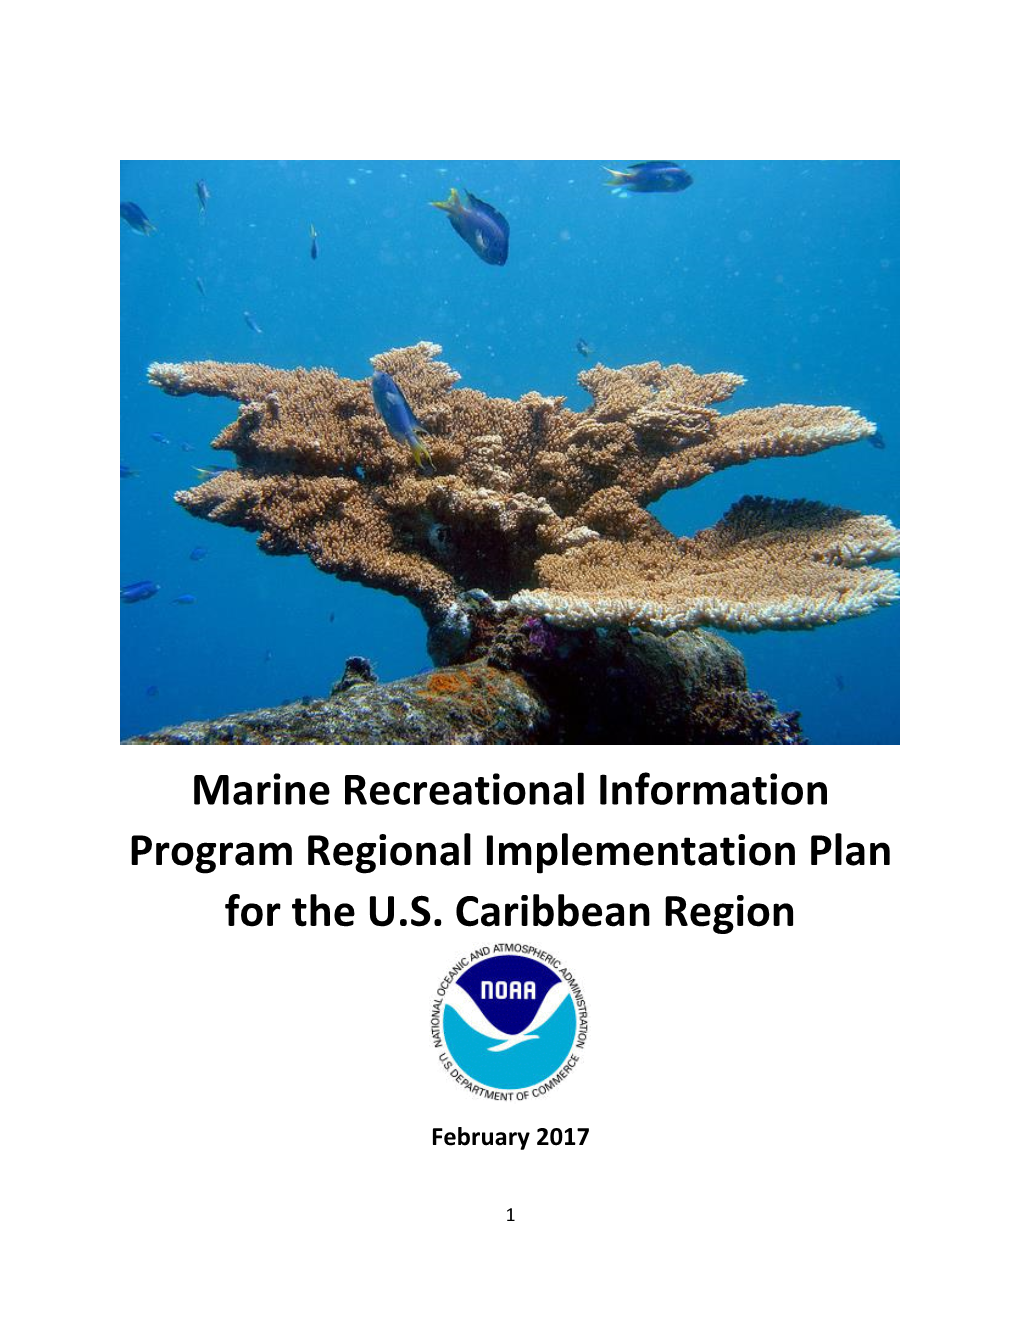 Marine Recreational Information Program Regional Implementation Plan for the U.S. Caribbean Region